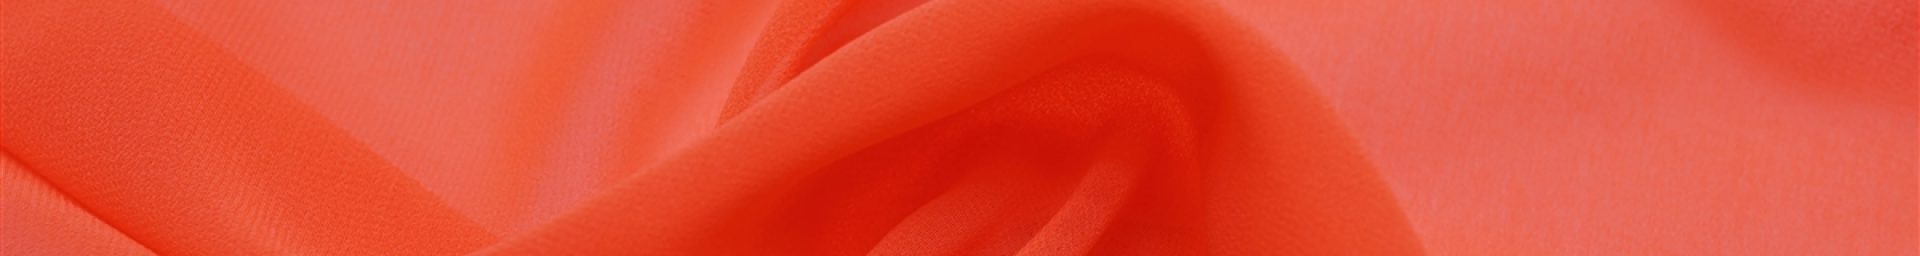 tecido-musseline-toque-de-seda-laranja-neon